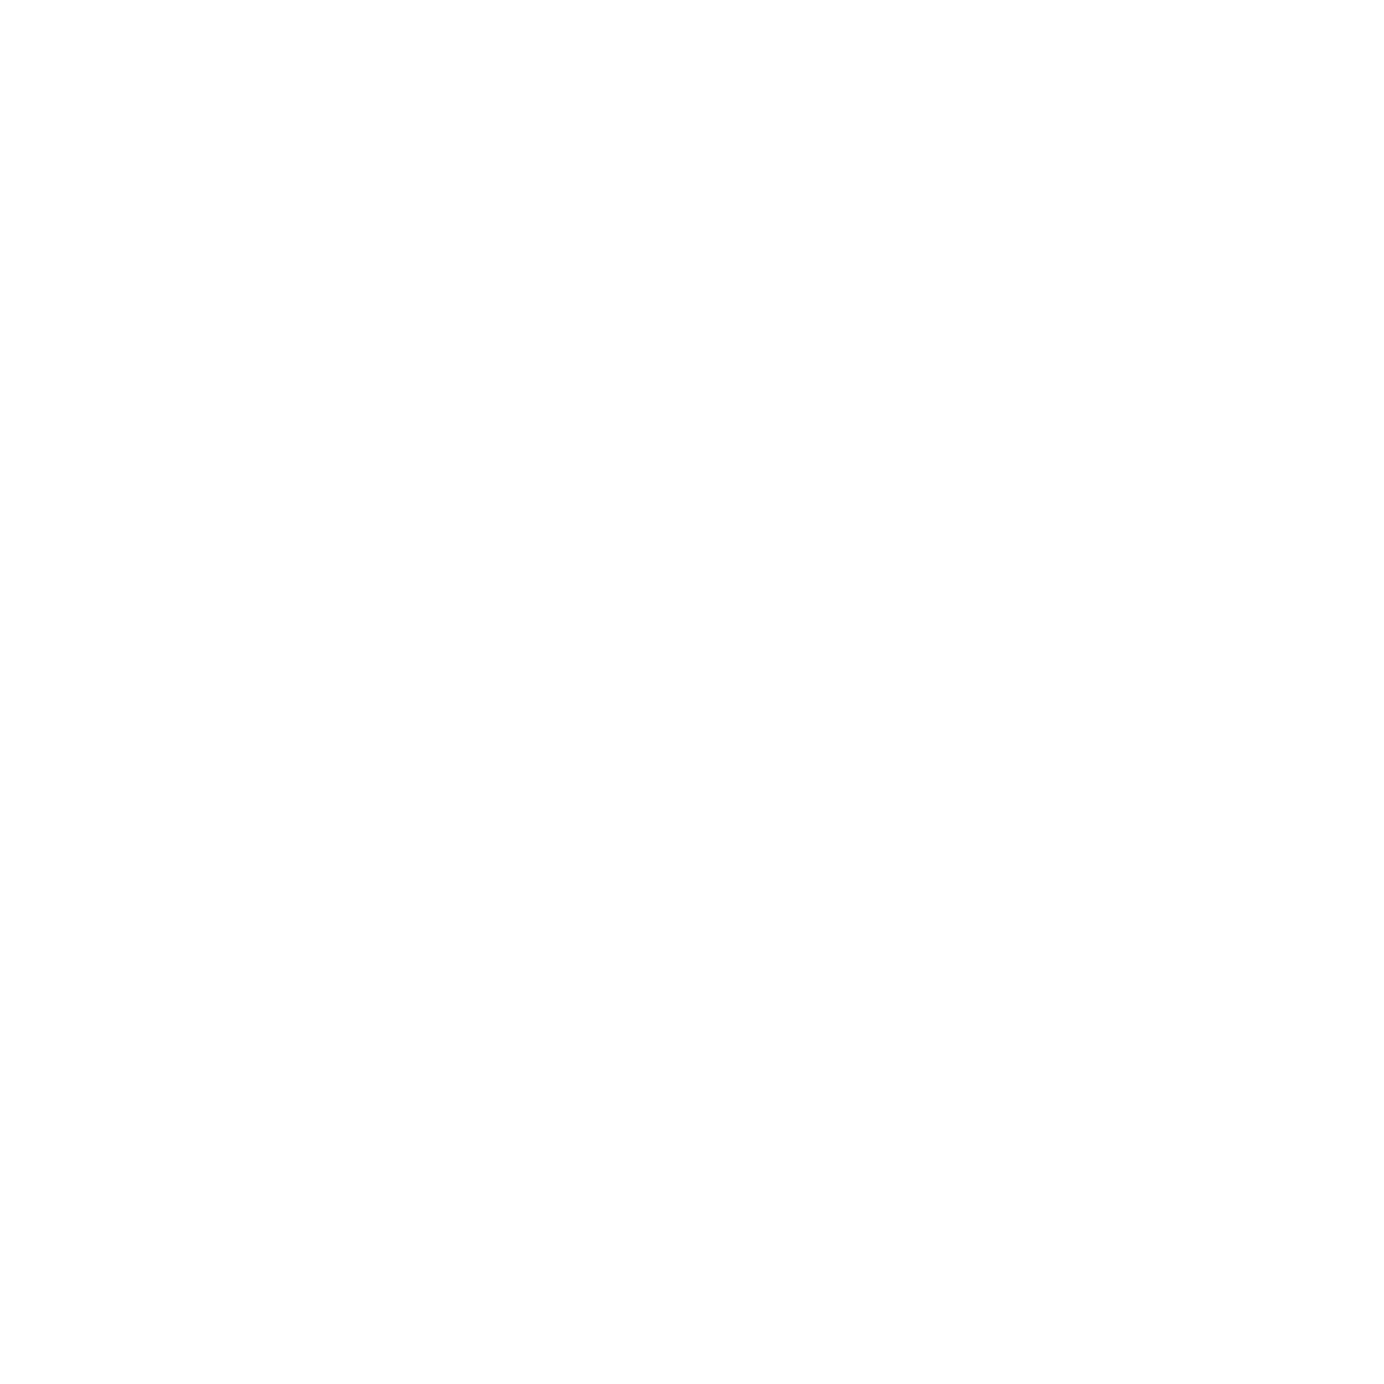 Central City Apartments logo